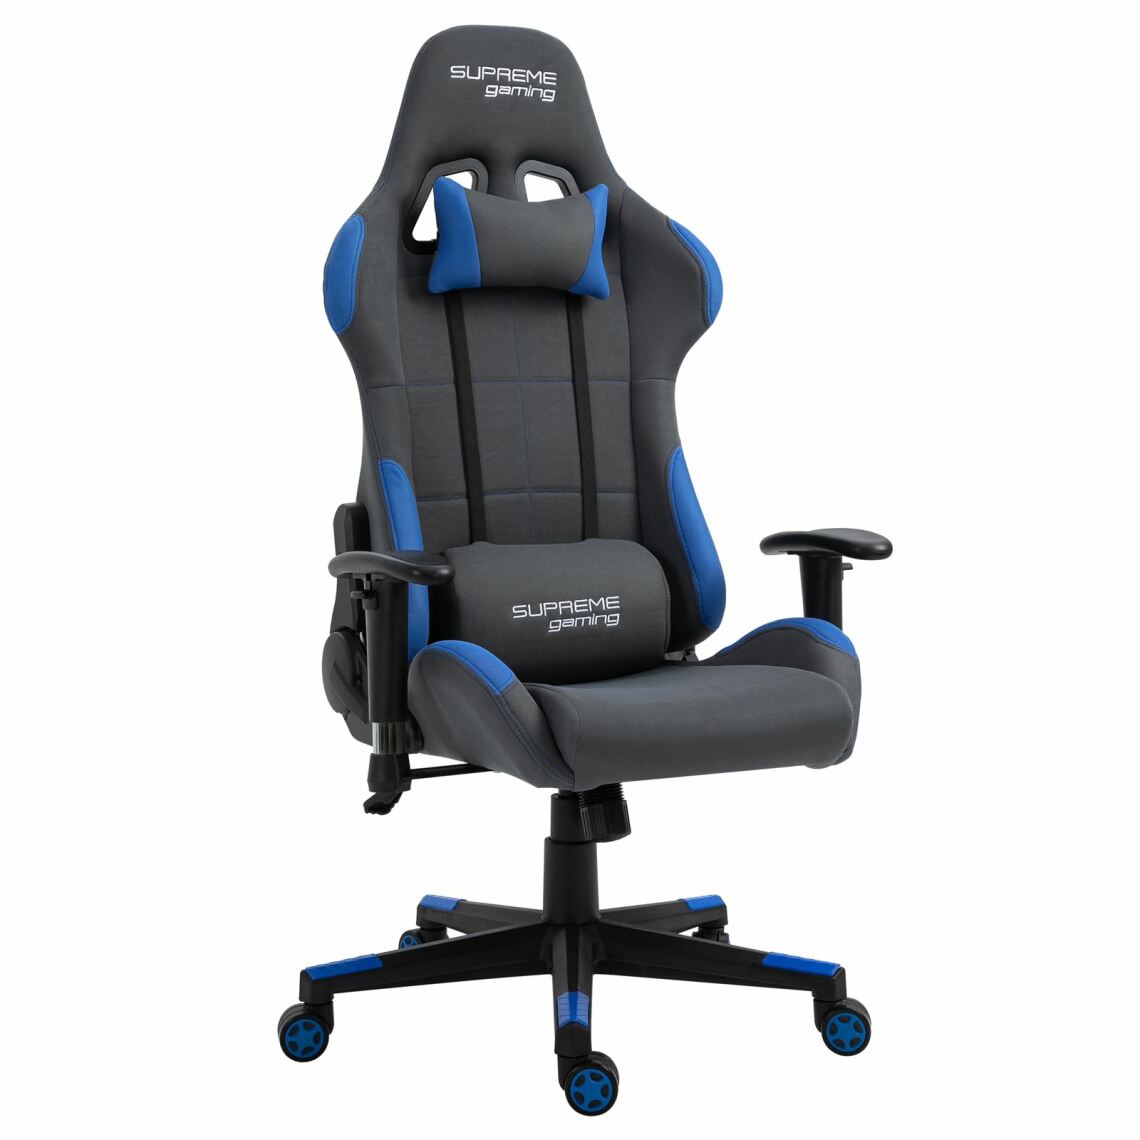 Idimex - Chaise de bureau gaming SWIFT, revêtement en tissu gris et bleu - Chaise gamer